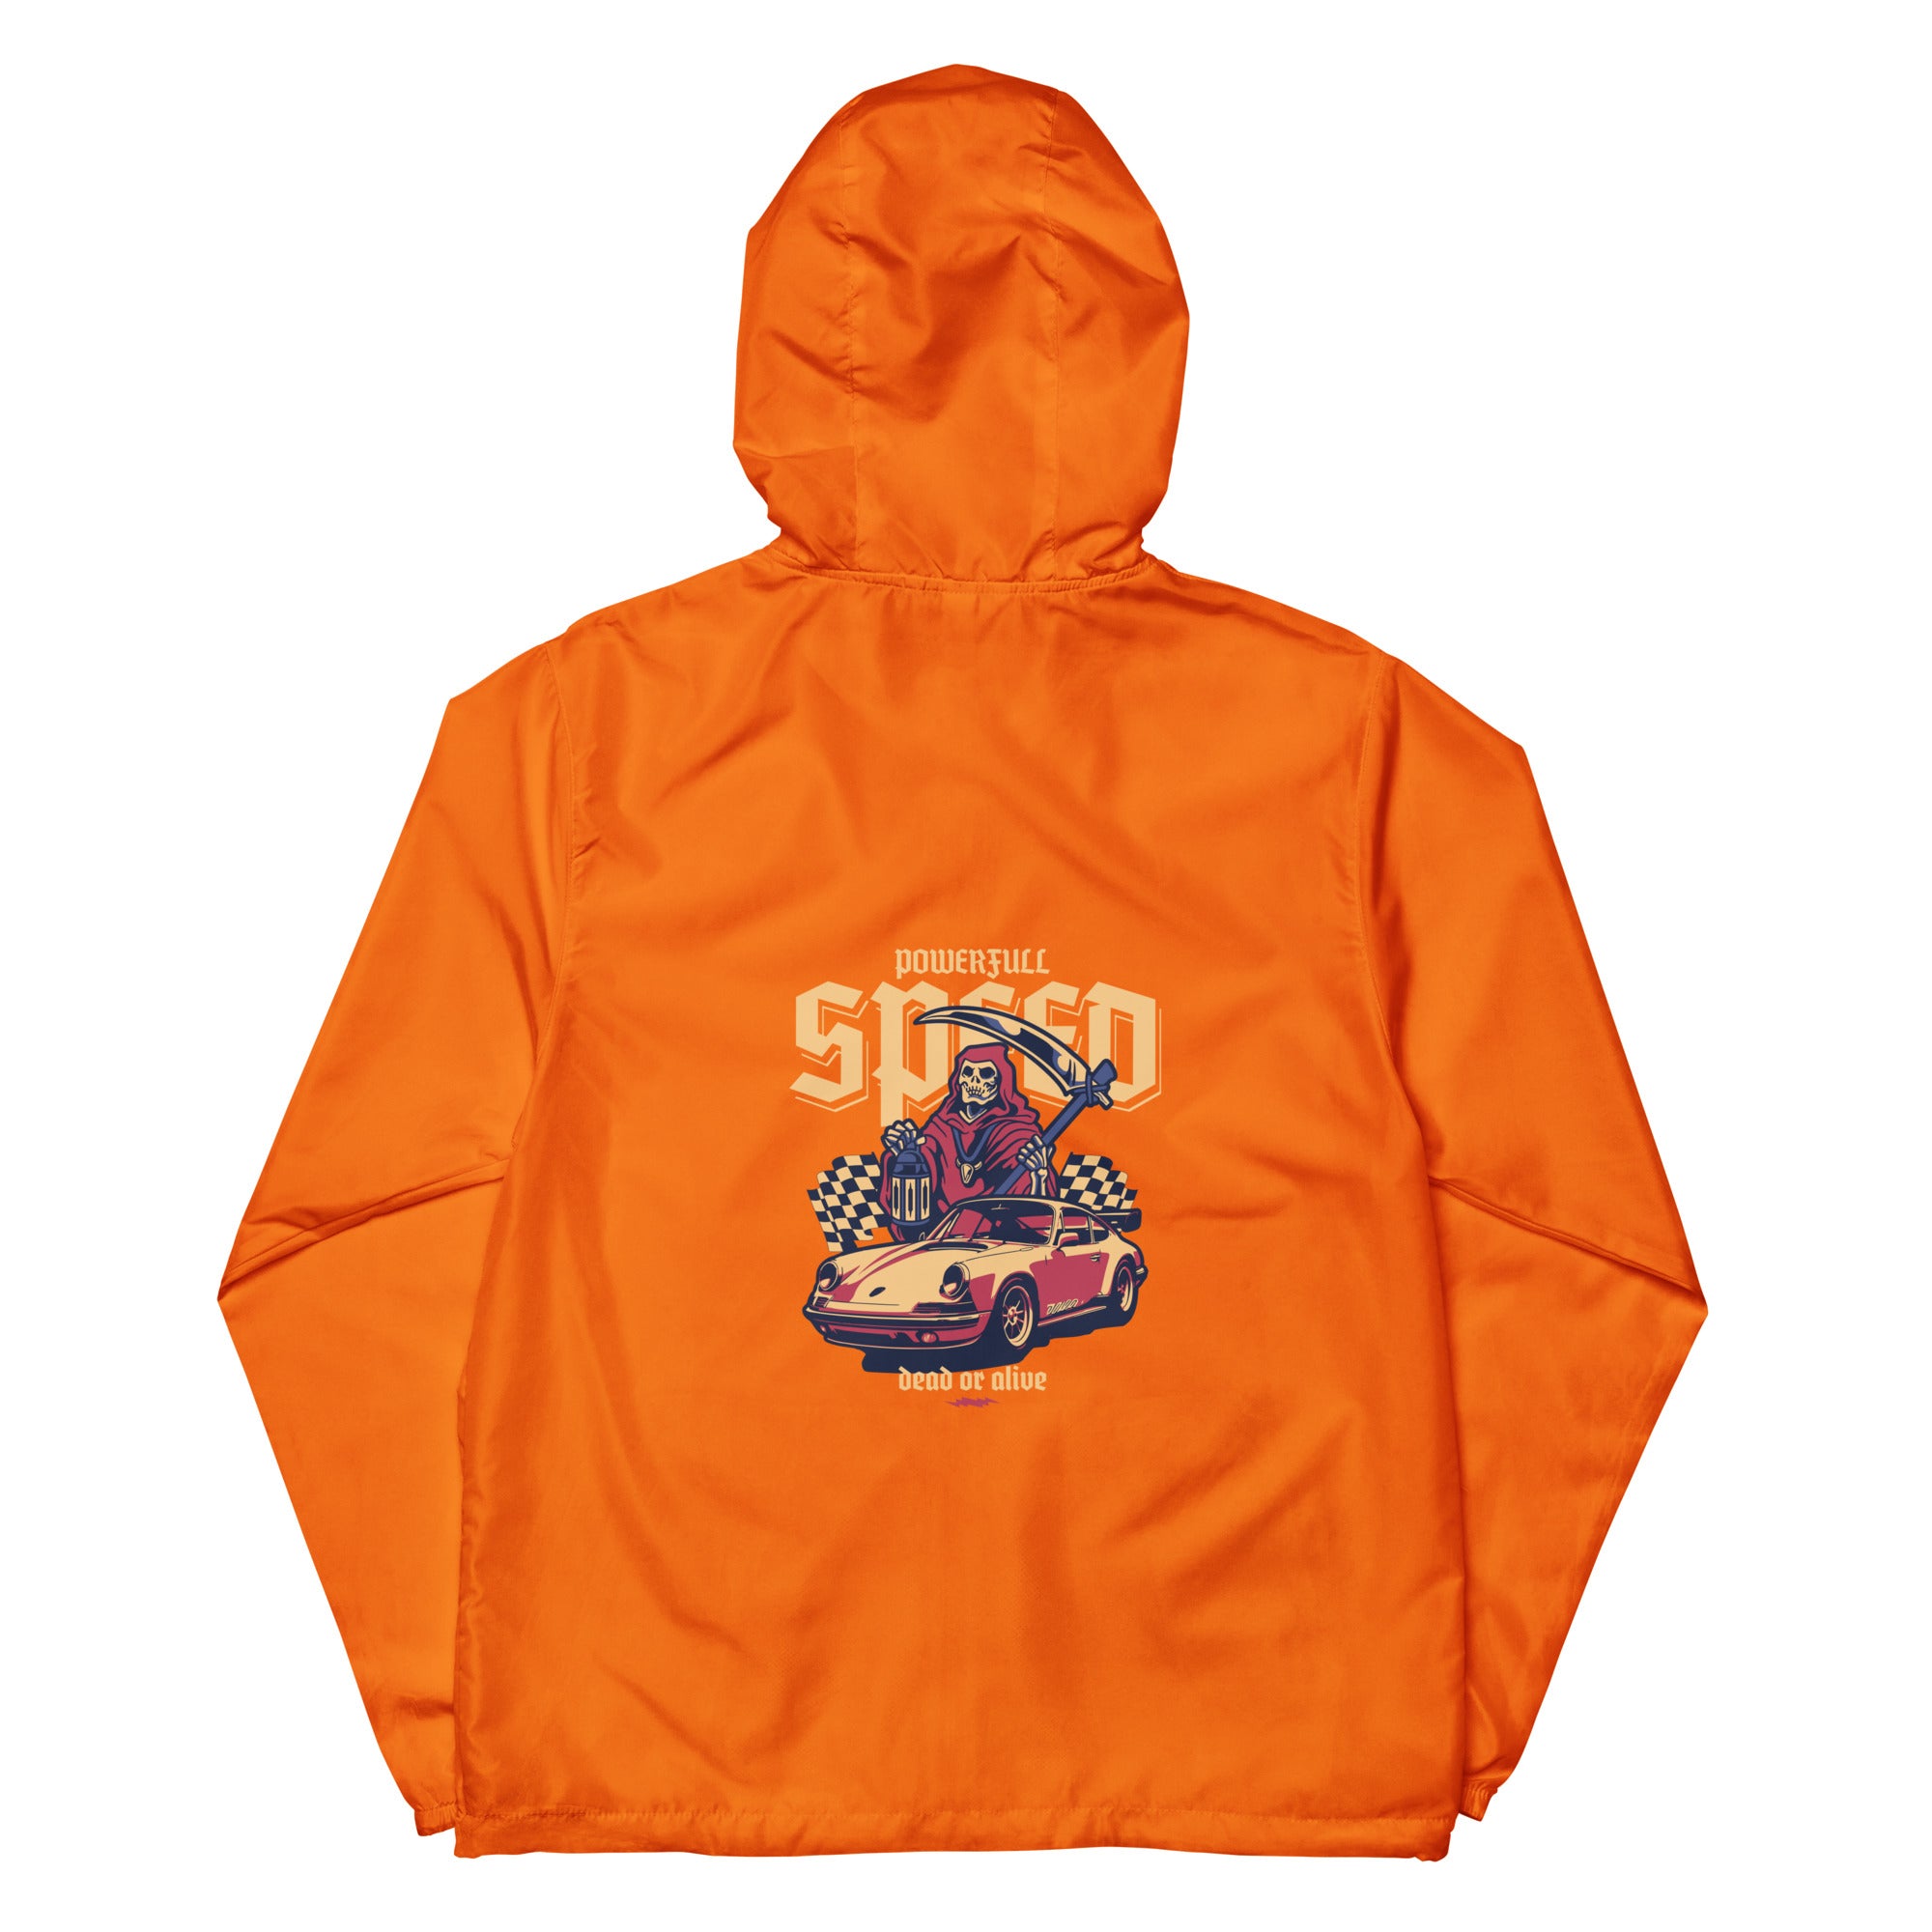 SORTYGO - Powerful Speed Men Zip Up Windbreaker in Safety Orange